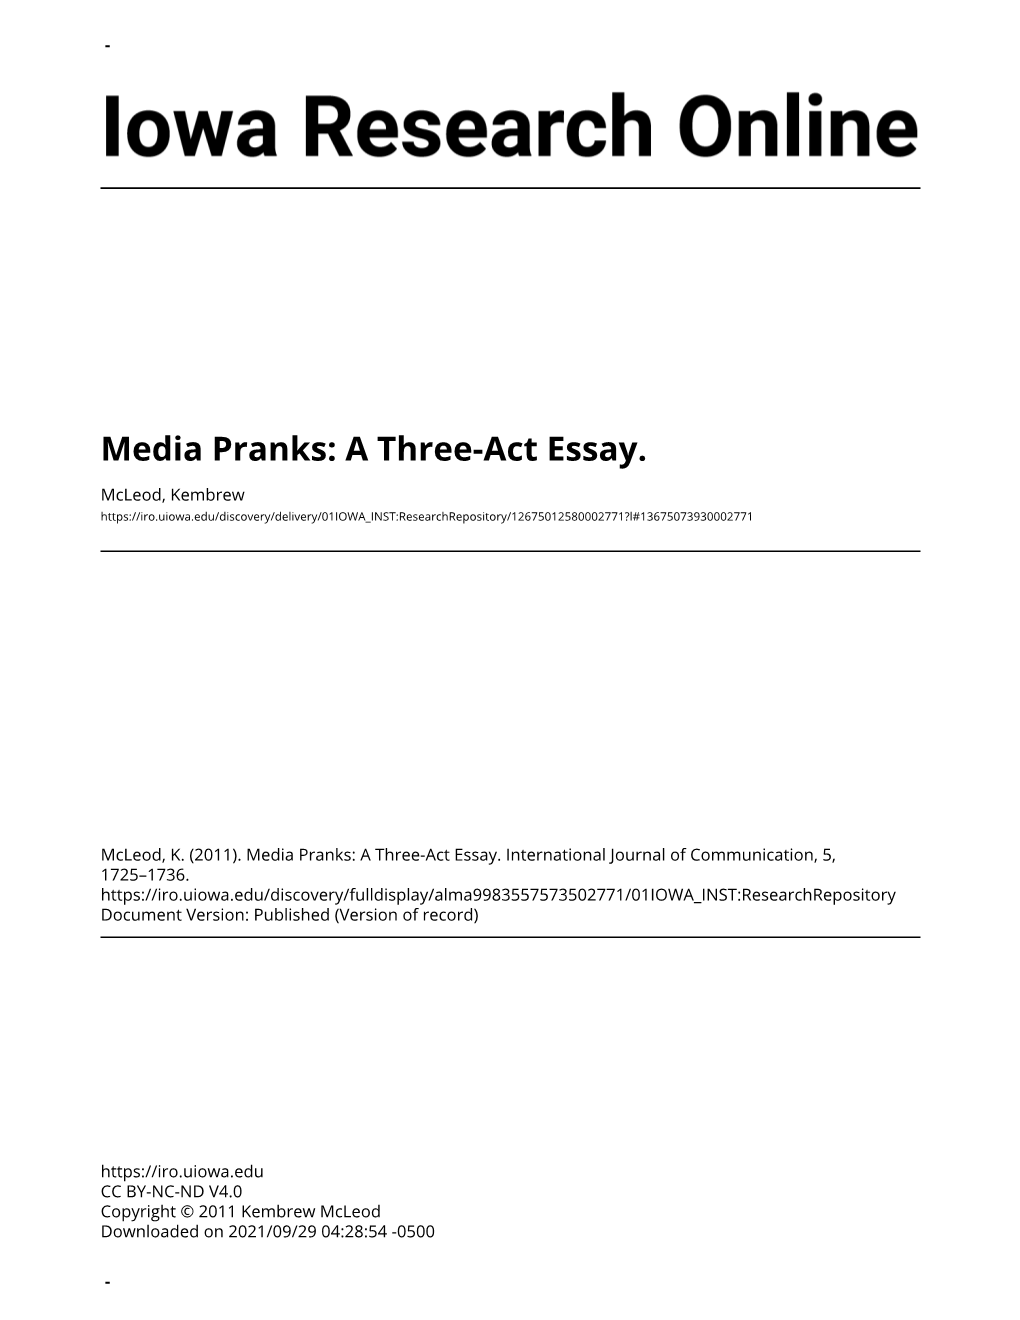 Media Pranks: a Three-Act Essay